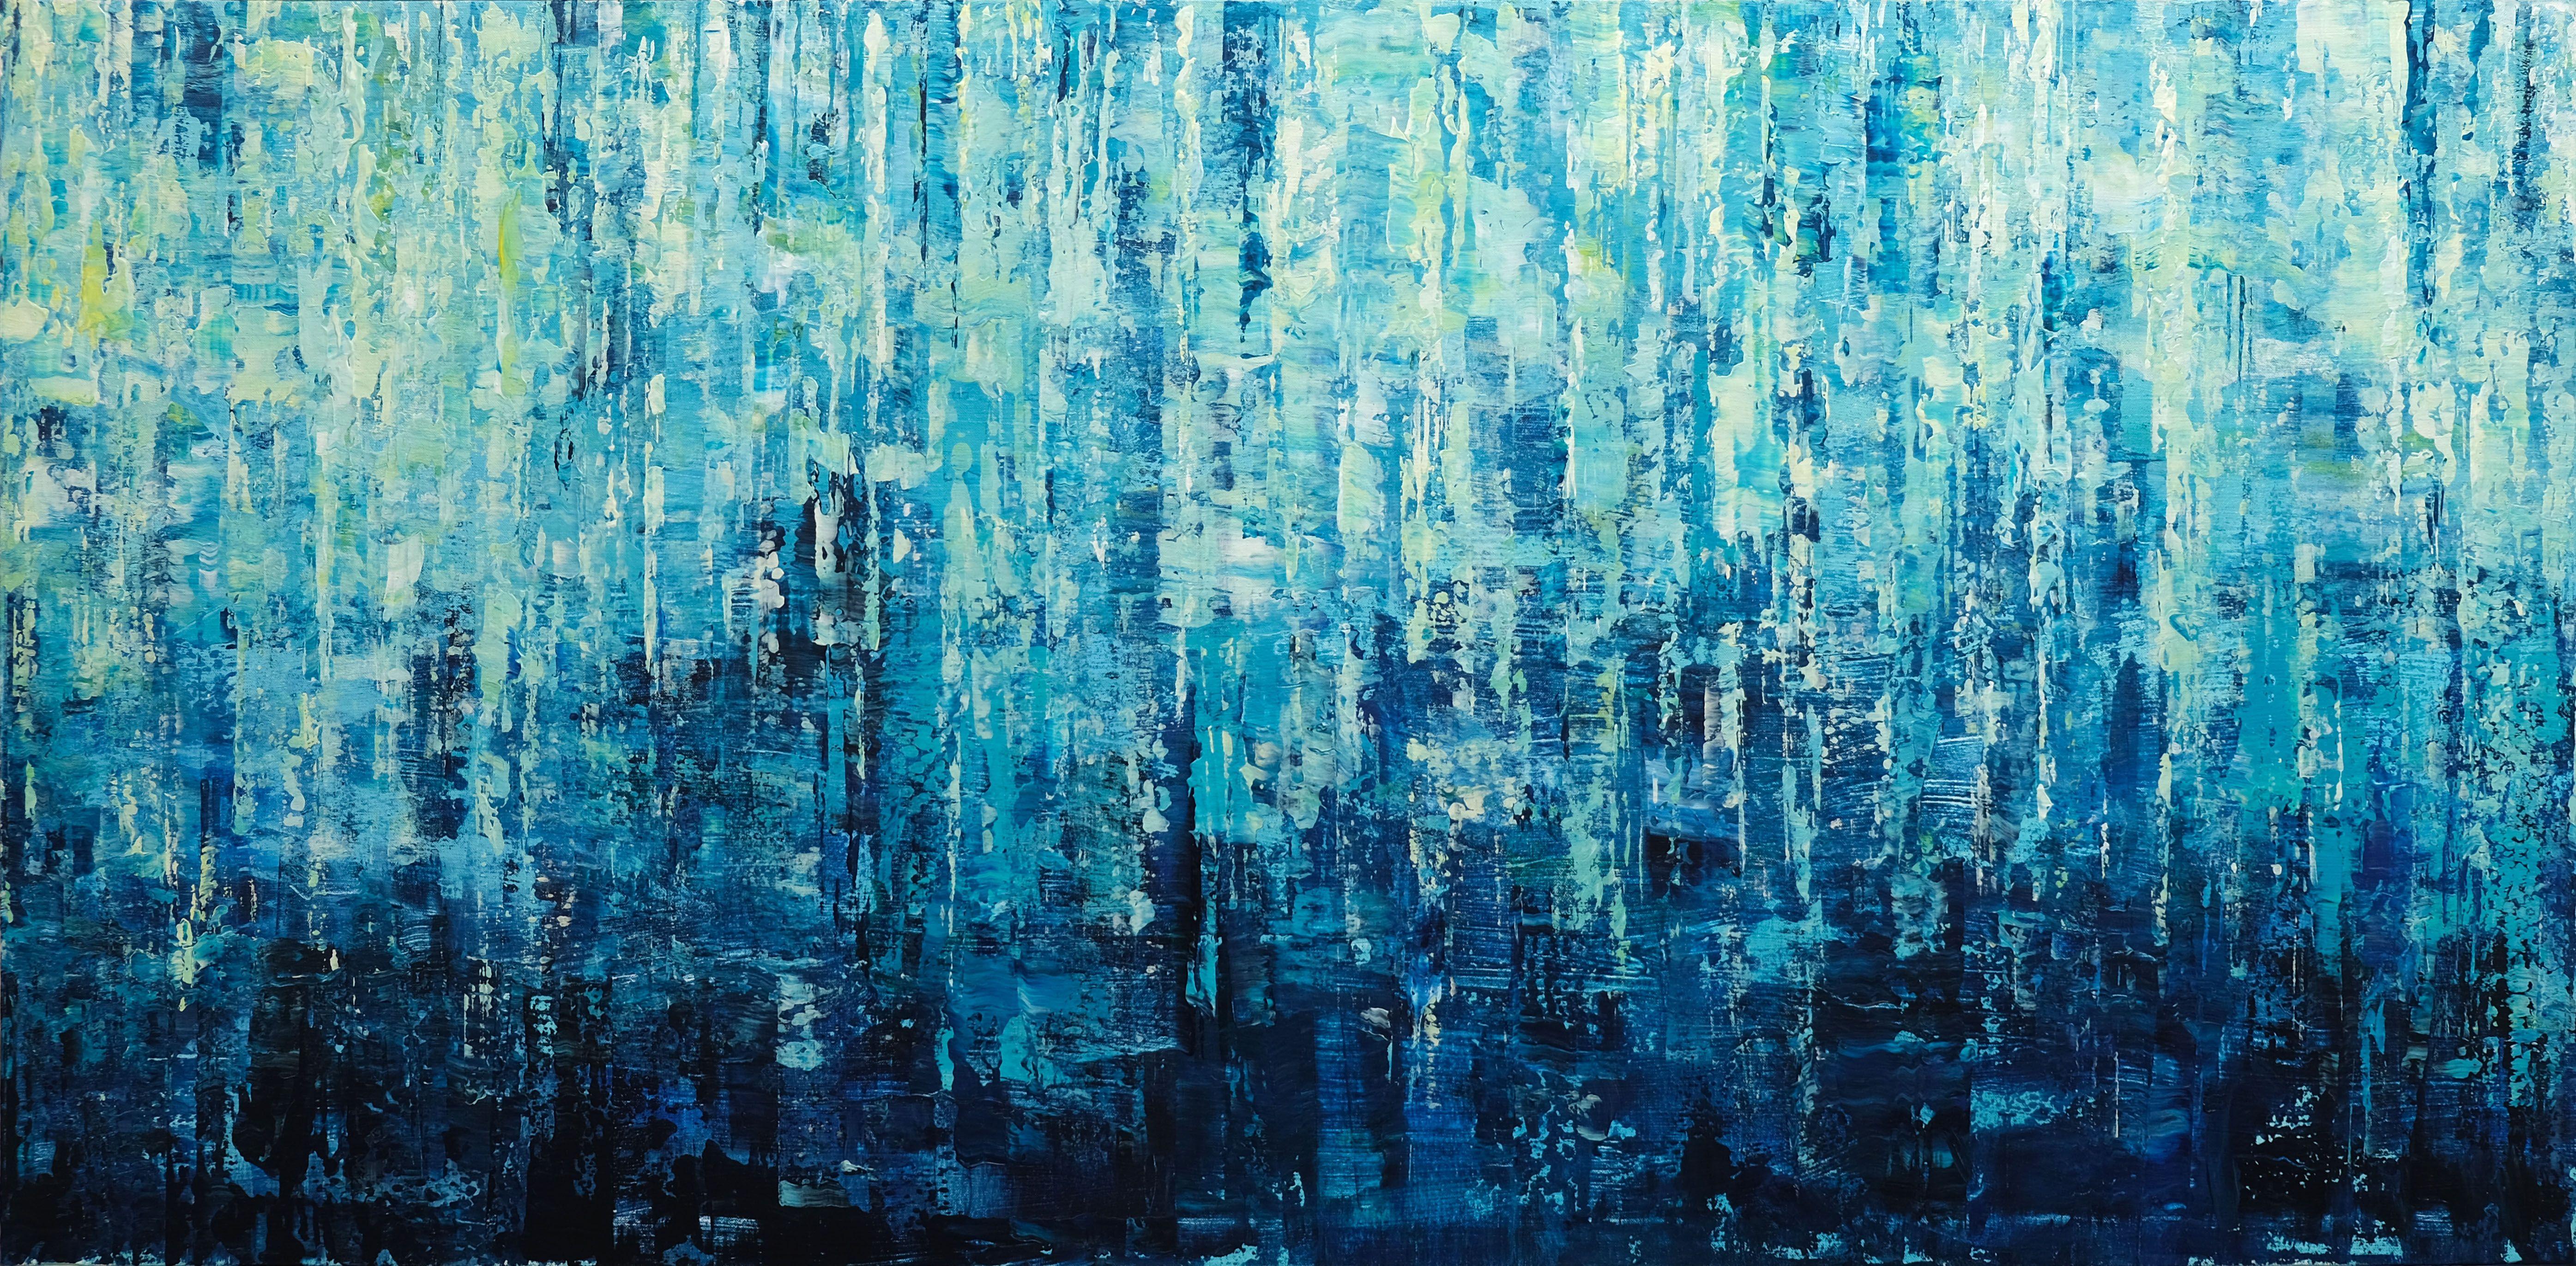 Turquoise Symphony, Painting, Acrylic on Canvas